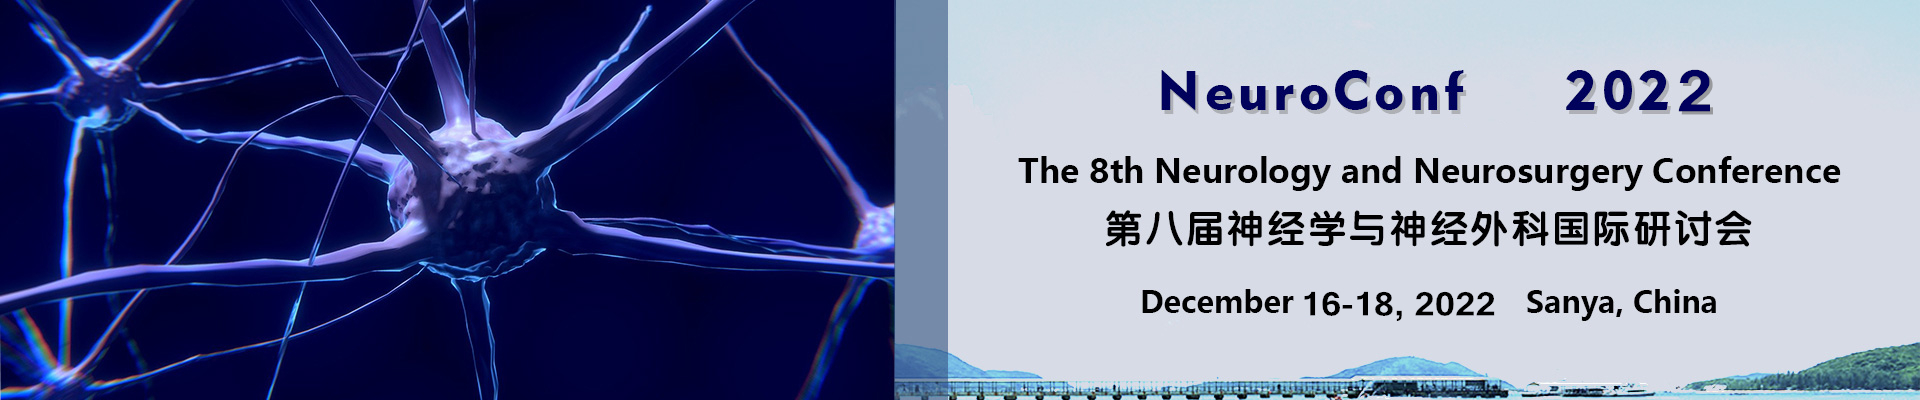 The 8th Int'l Neurology and Neurosurgery Conference (NeuroConf 2022), Sanya, Hainan, China